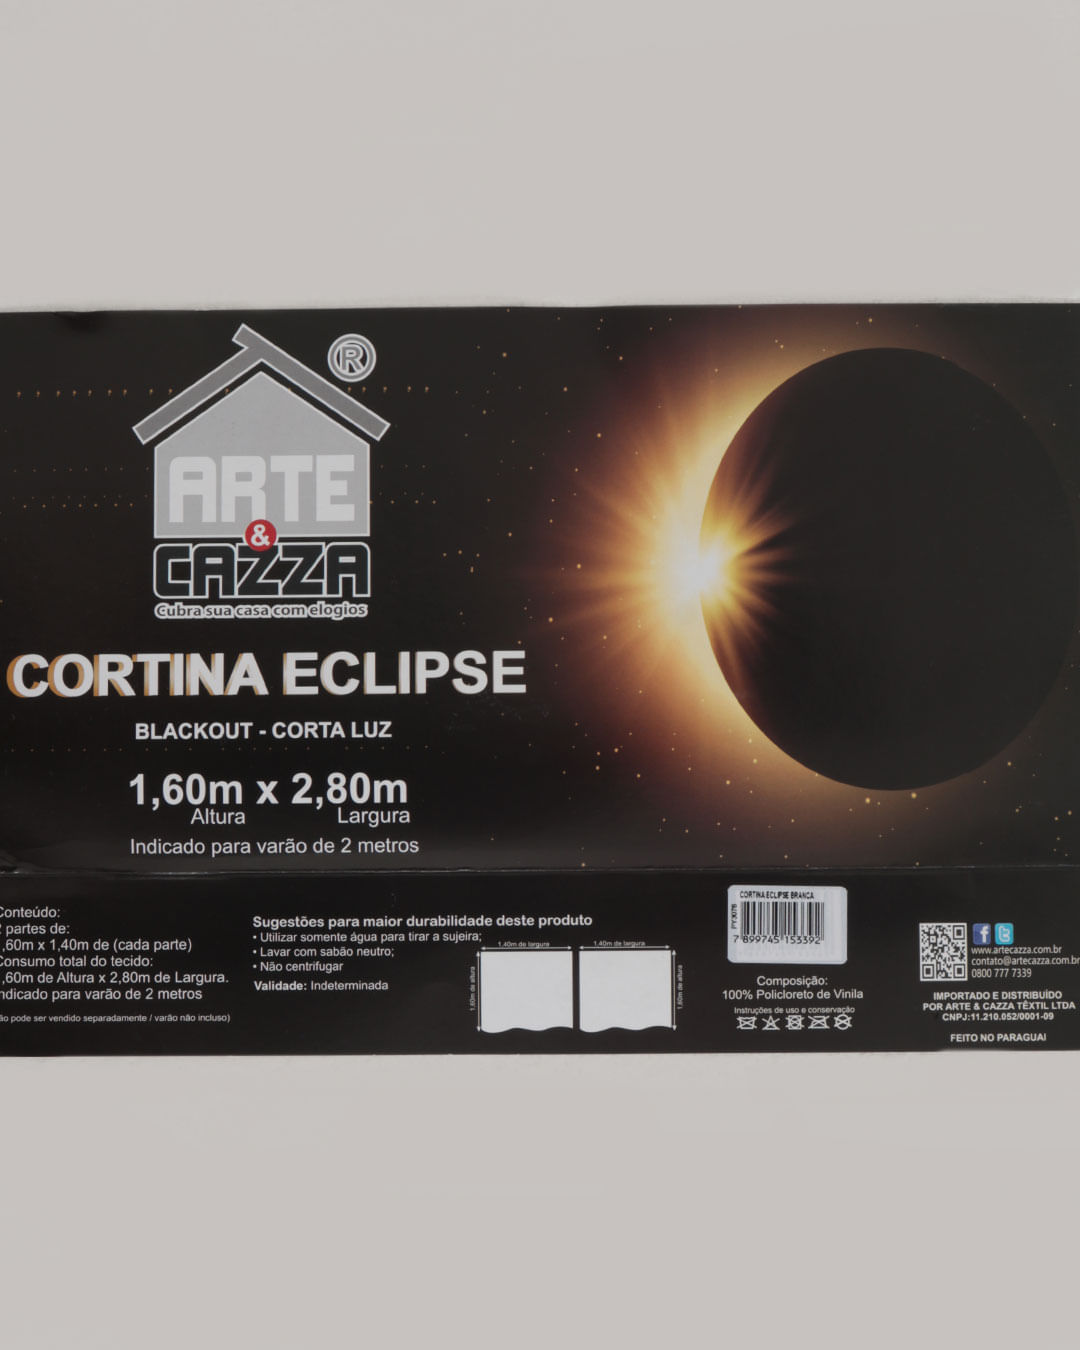 Cortina-Duplex-Eclipse-Blackout-Varao-ate-2m-Arte-Cazza-Branca